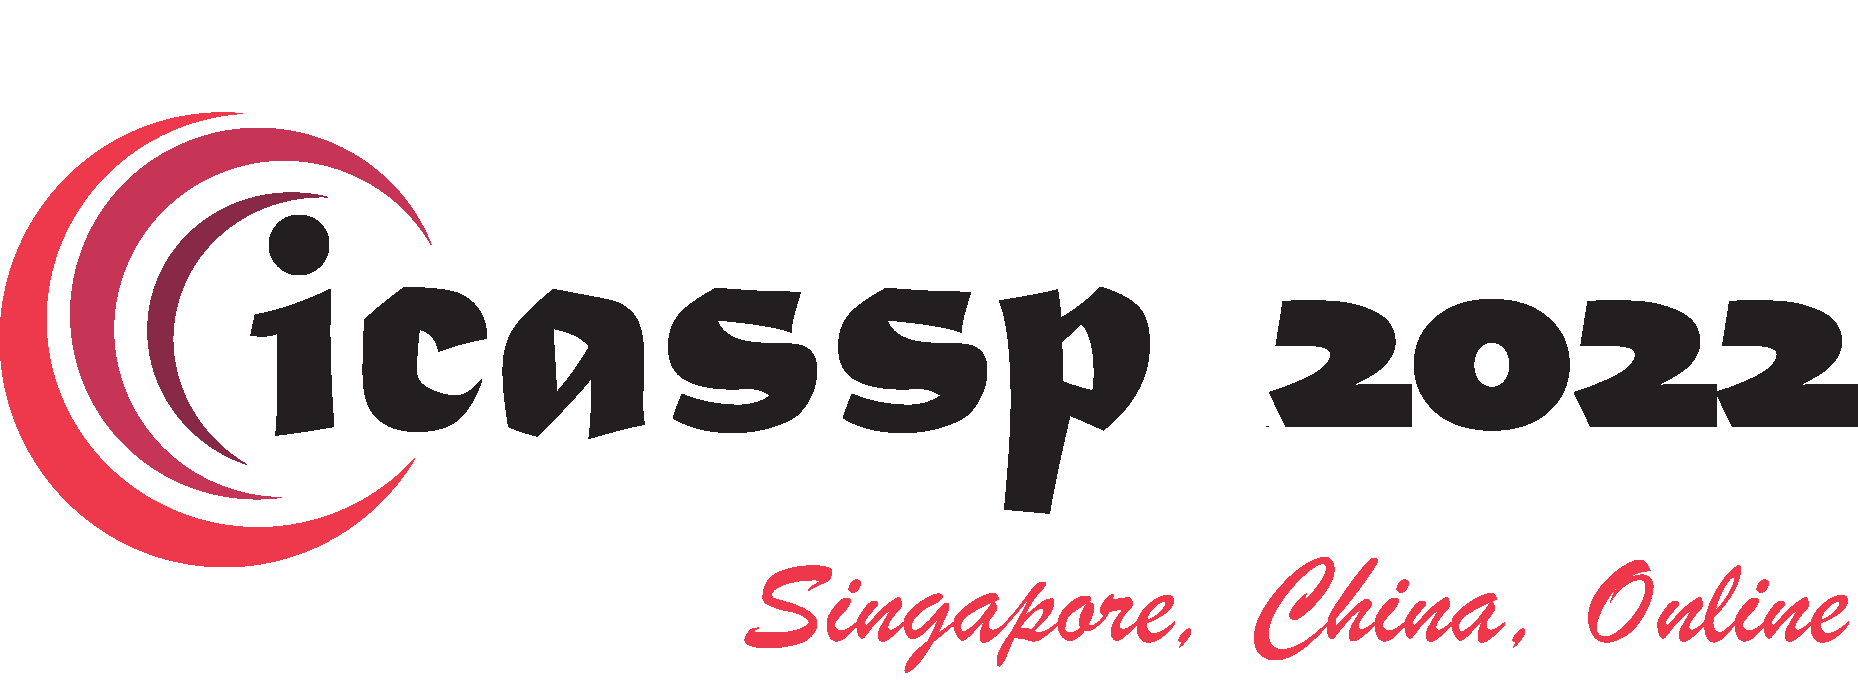 ICASSP 2022 Tandem-Hybrid Logo